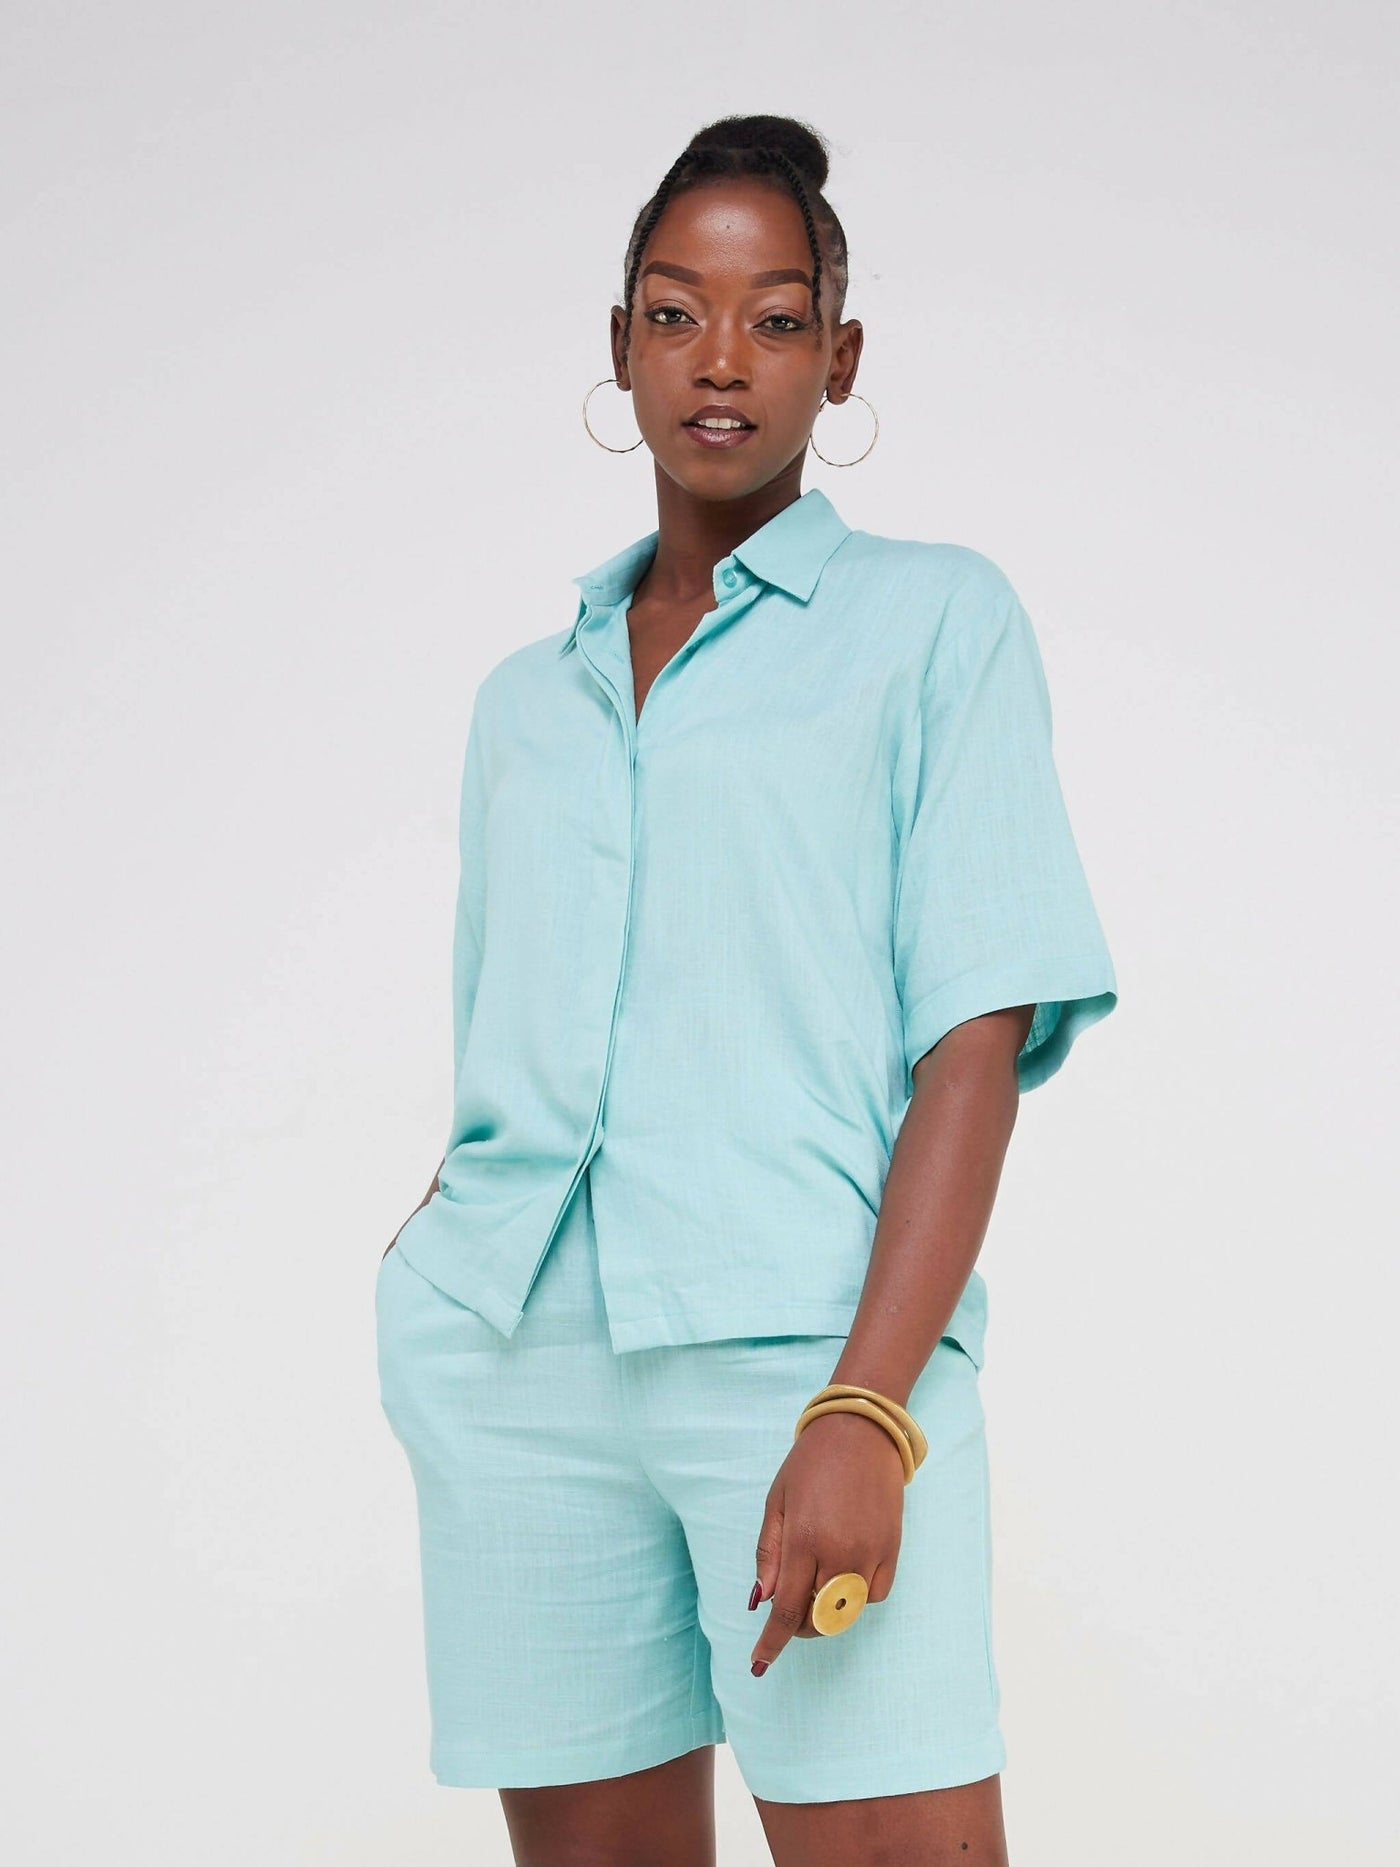 Fauza Design Asili Short and Shirt Sets - Blue - Shopzetu